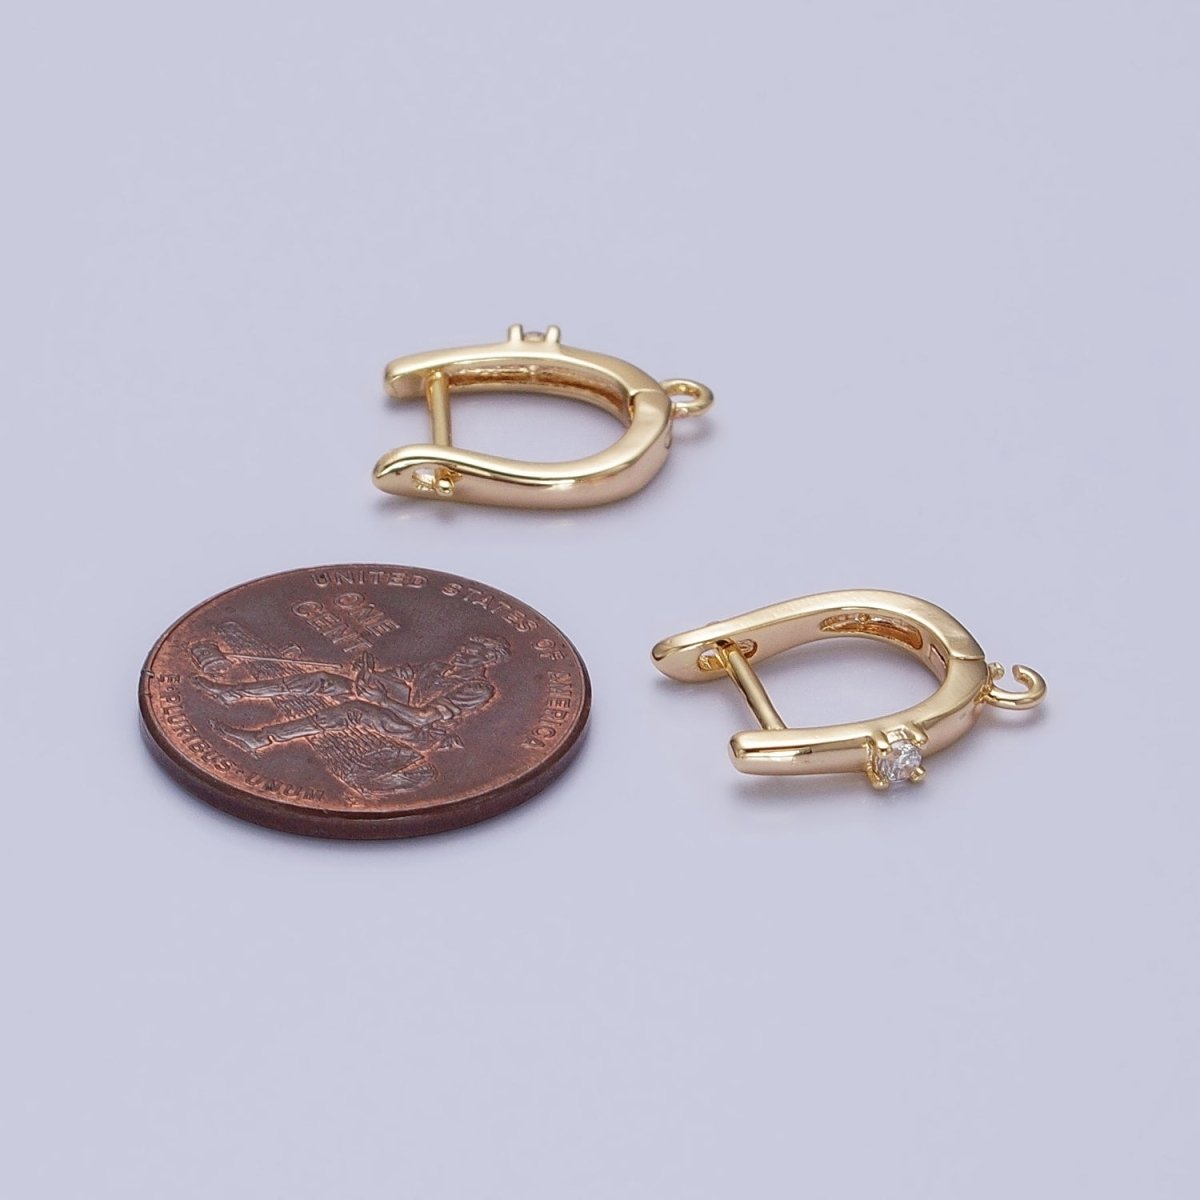 16K Gold Filled Round Clear CZ Open Loop 14.5mm English Lock Earrings in Gold & Silver | Z-239 Z-240 - DLUXCA